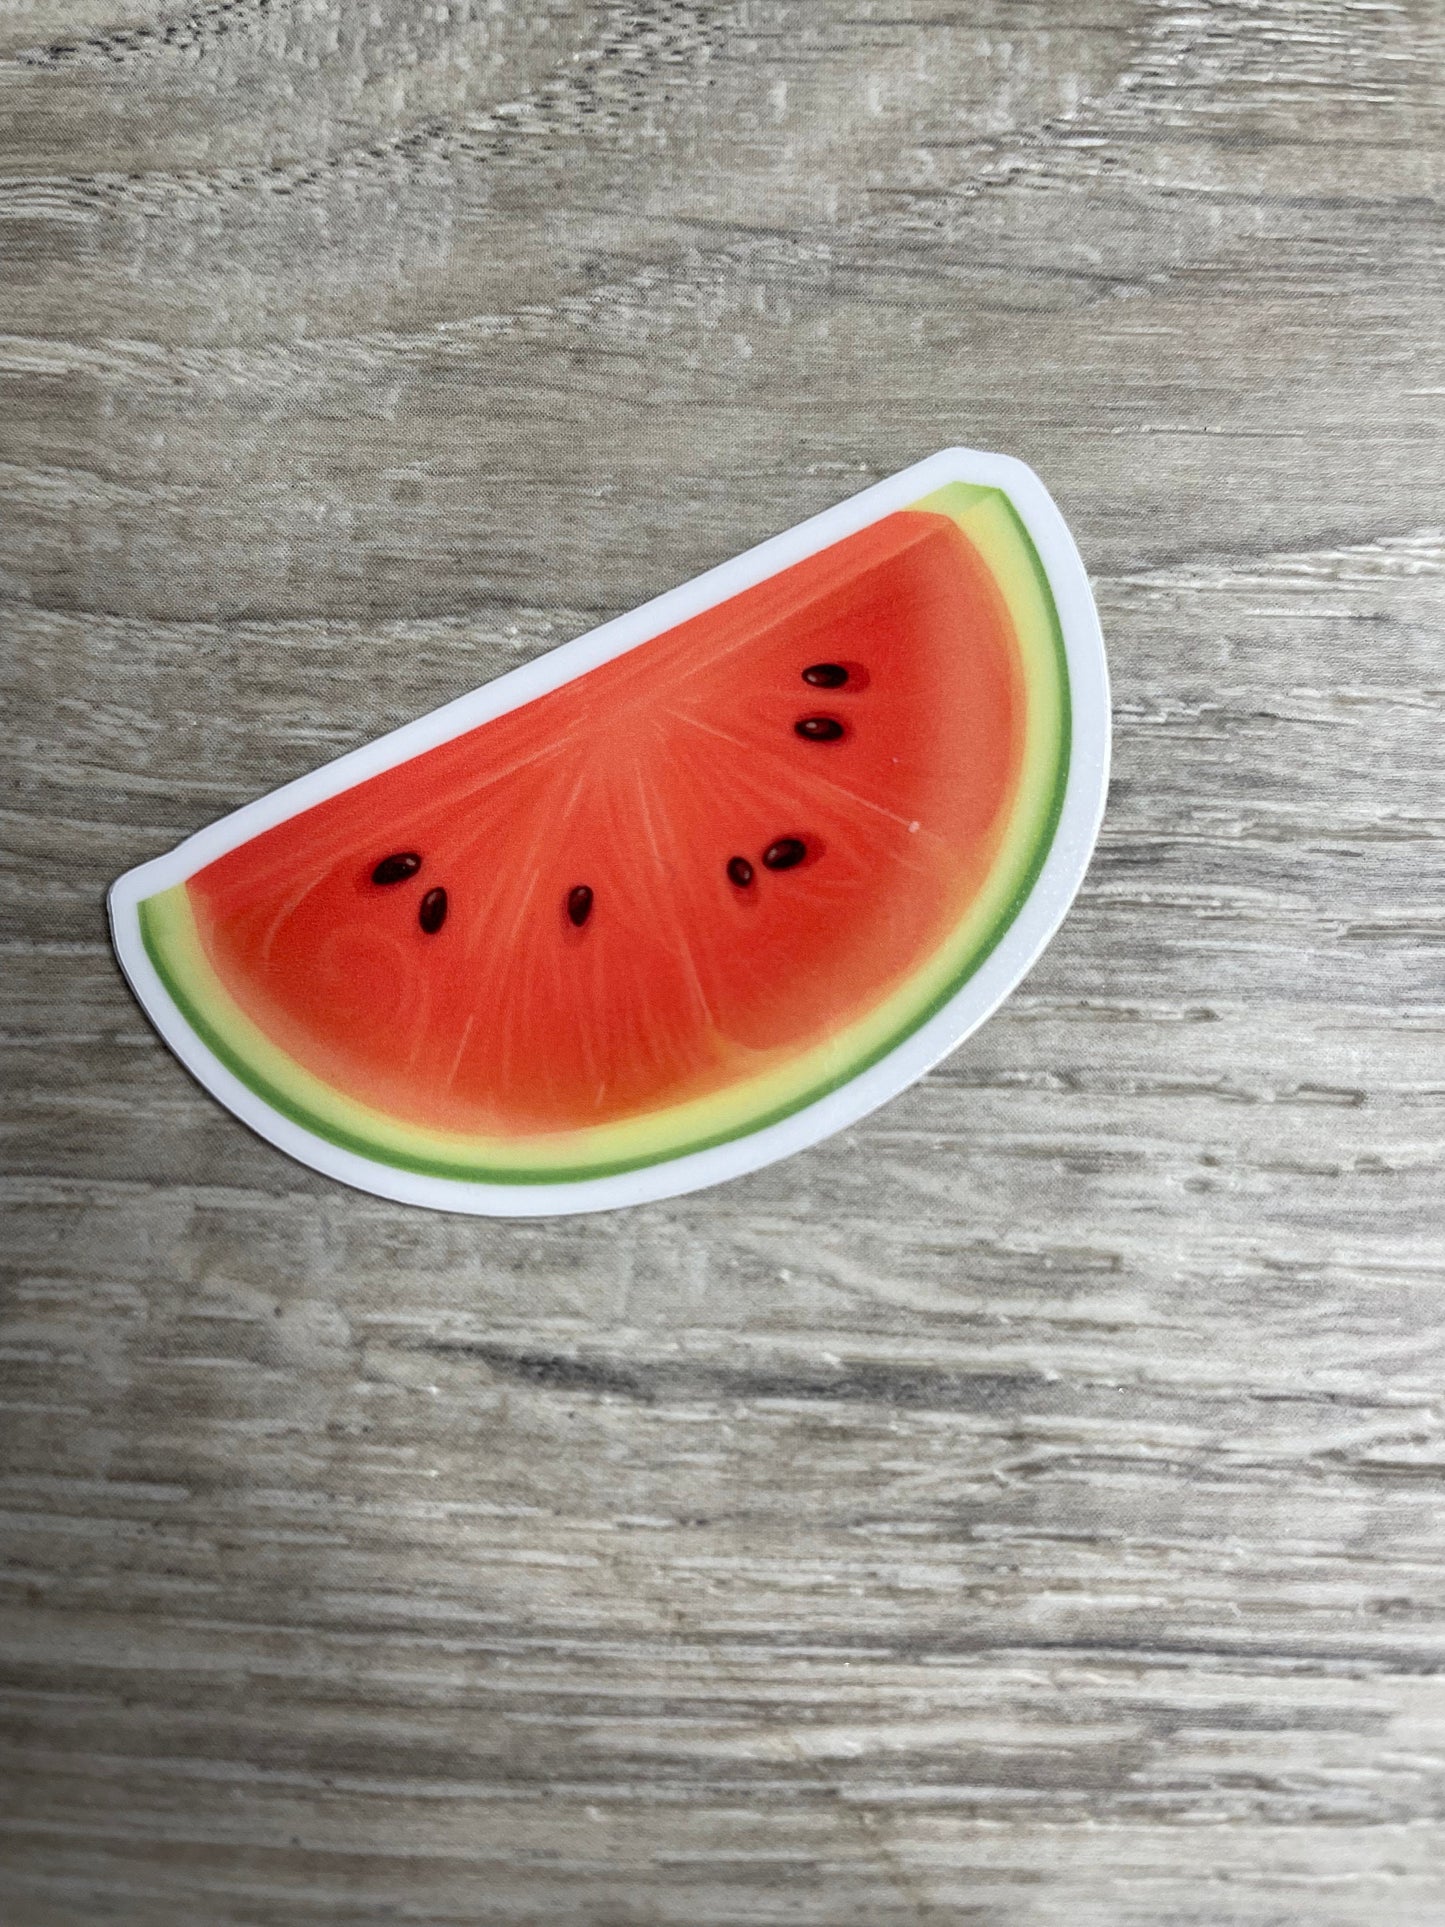 Vegetable and Fruits Vinyl Sticker 10-Pack, Vegan, Vegetarian, Farm Market, Produce Stickers